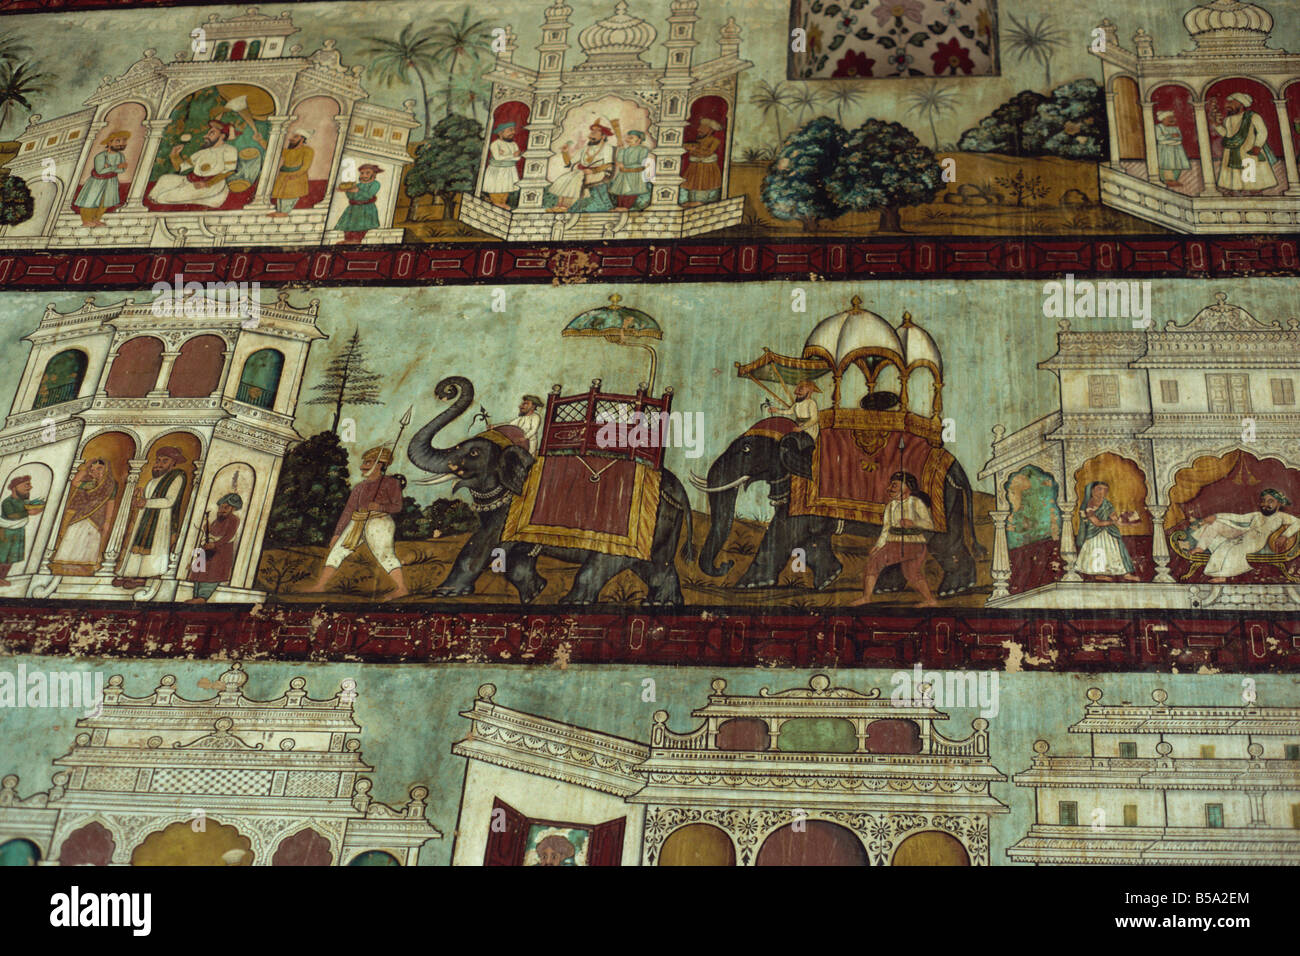 Wandbilder im Palast Tipu Sultans s Seringapatam Mysore Karnataka Staat Indien Asien Stockfoto